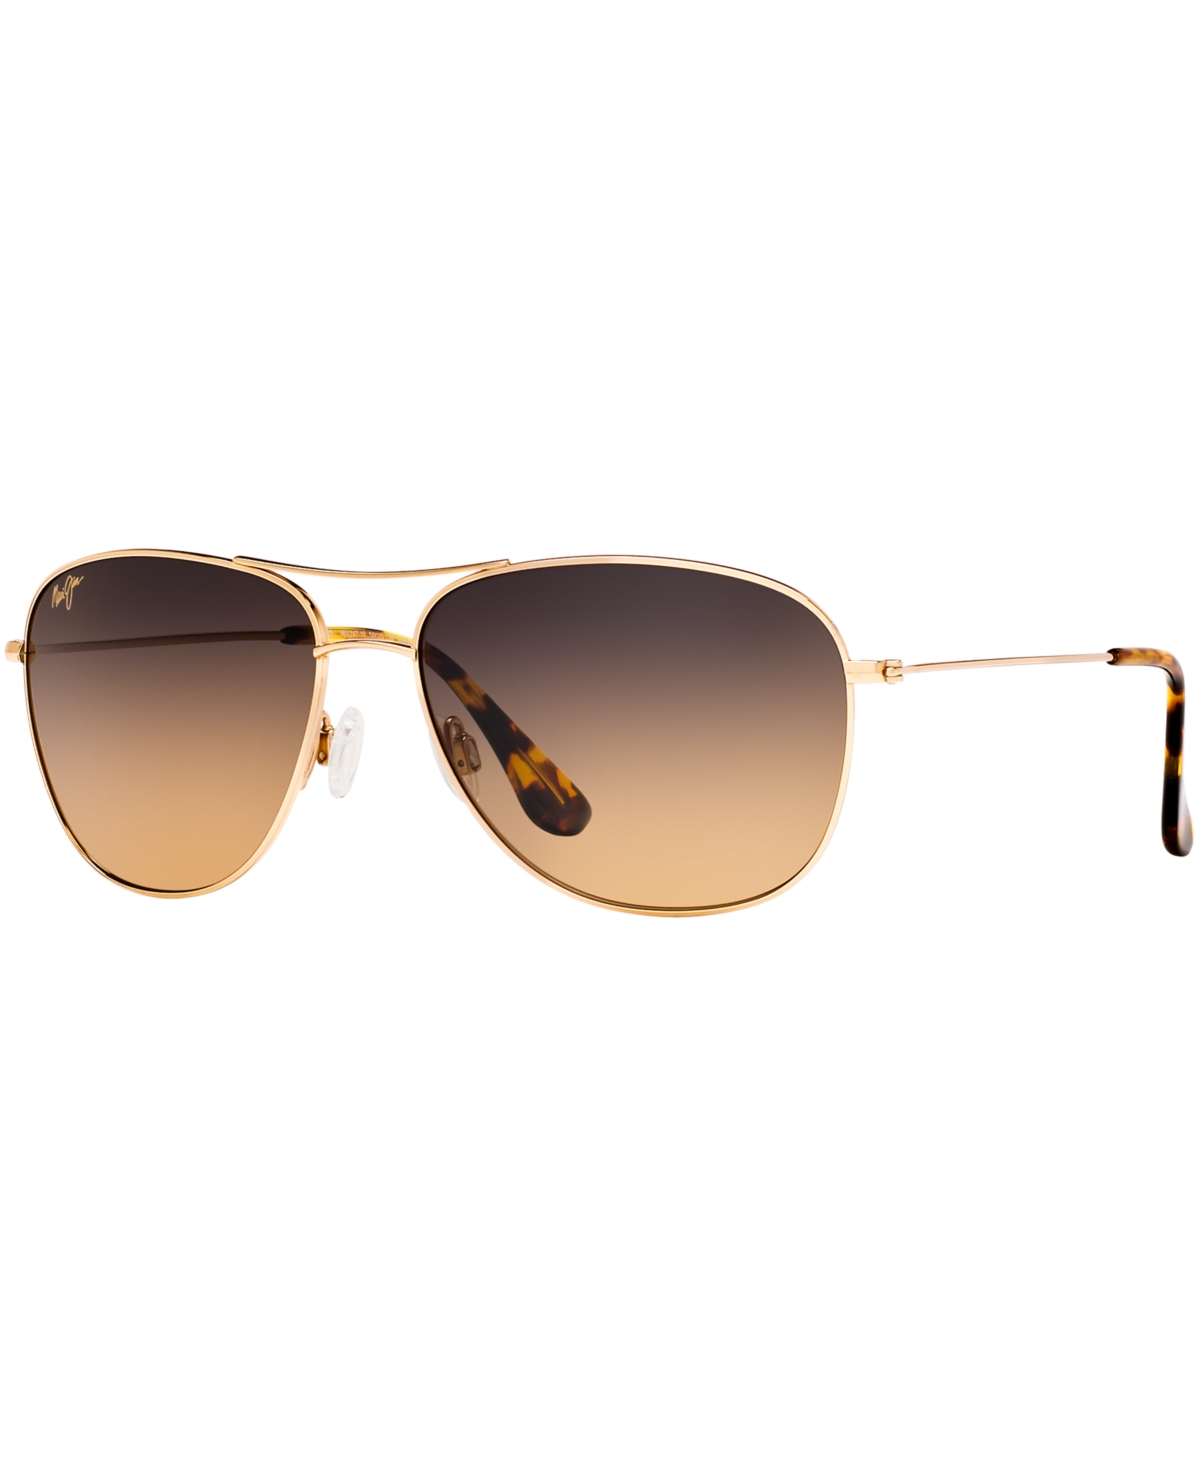 Polarized Cliffhouse Sunglasses, MJ000360 - Gold/Brown